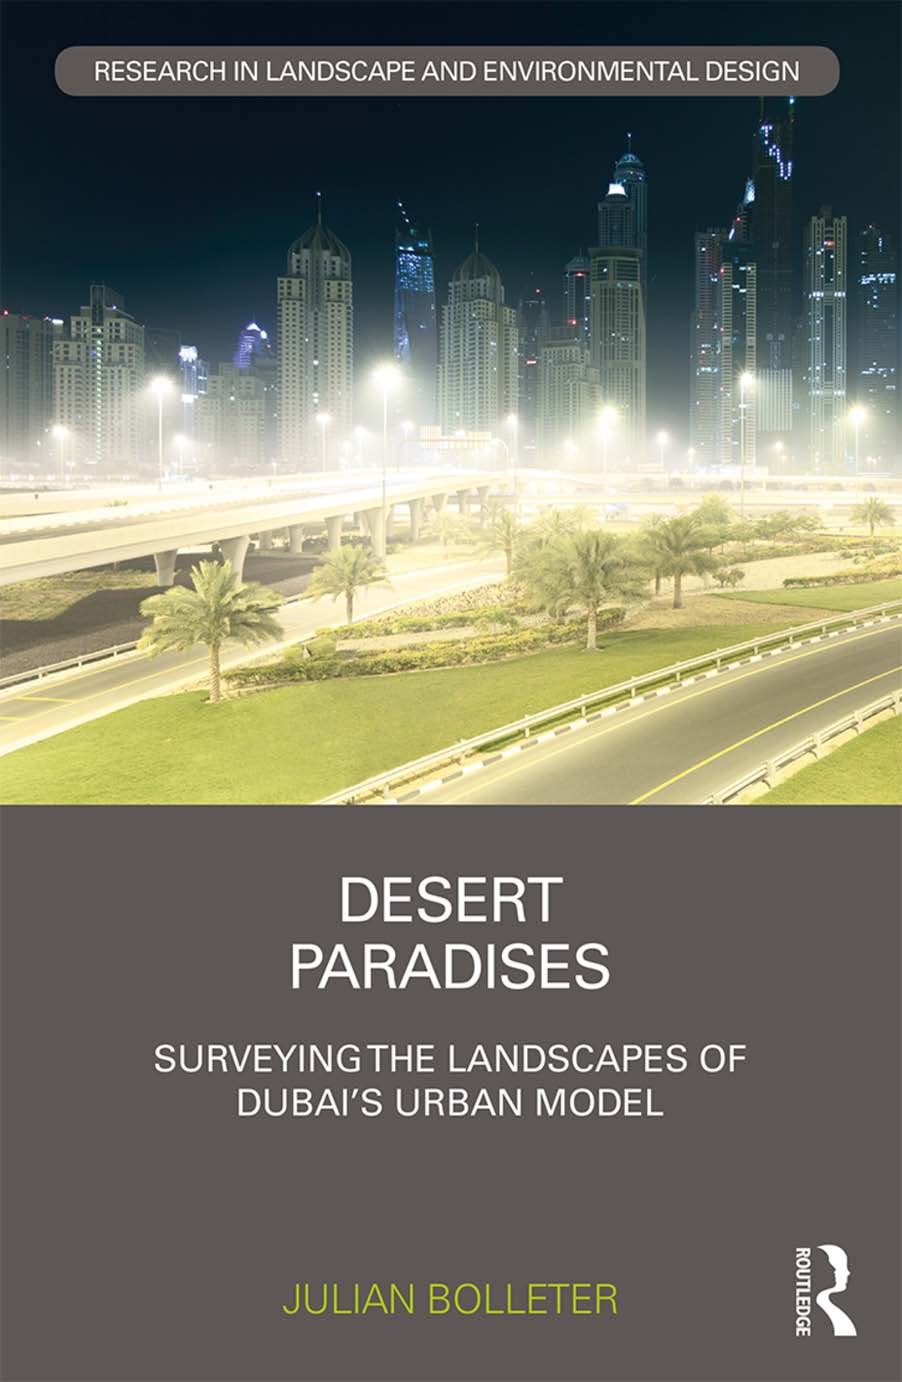 2019_Desert paradises Surveying the landscapes of Dubai’s urban model.jpg